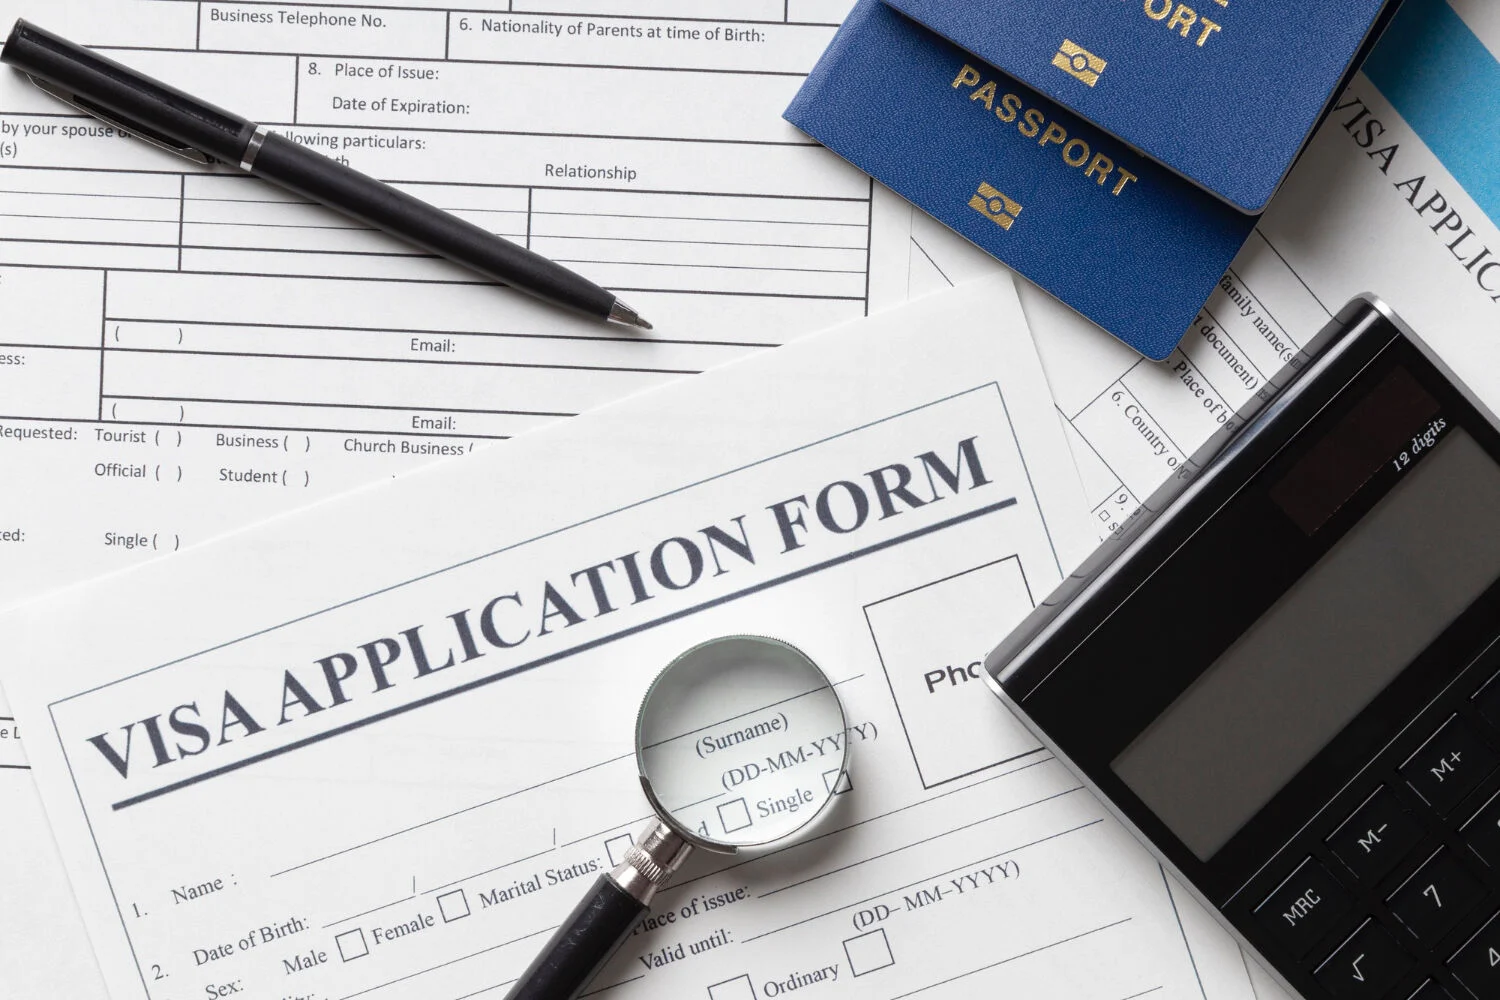 Visa Application Process